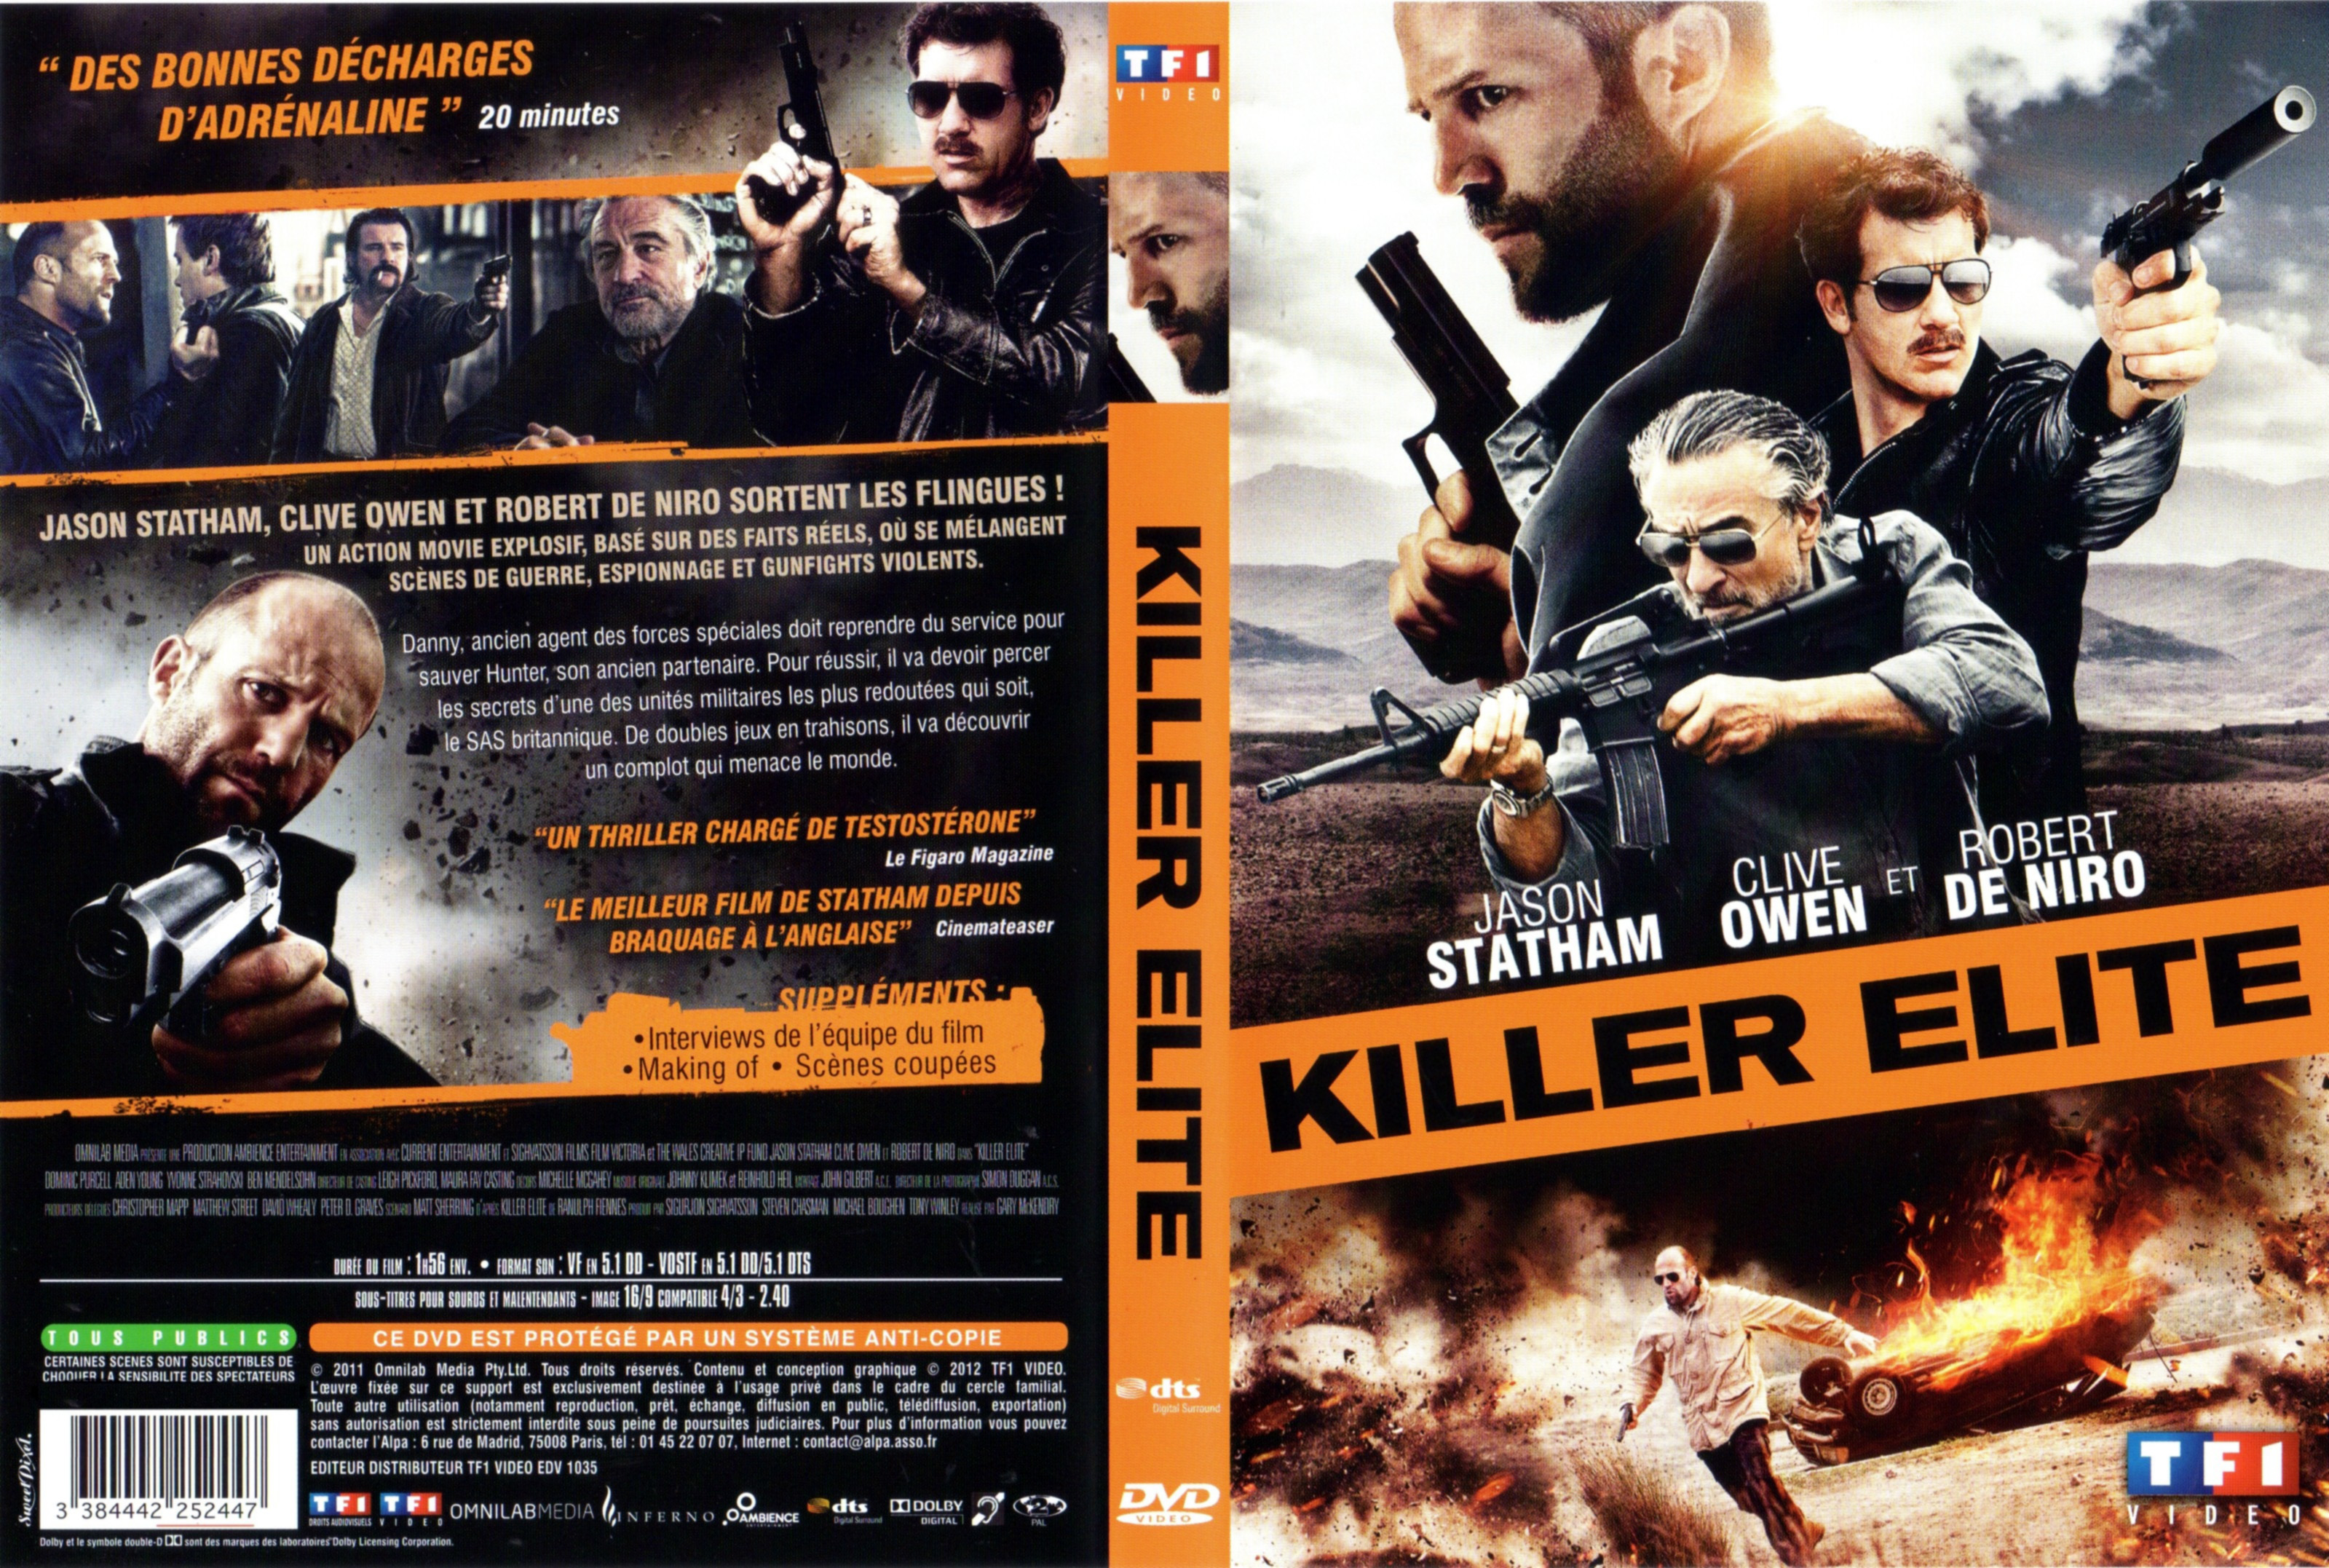 Jaquette DVD Killer elite